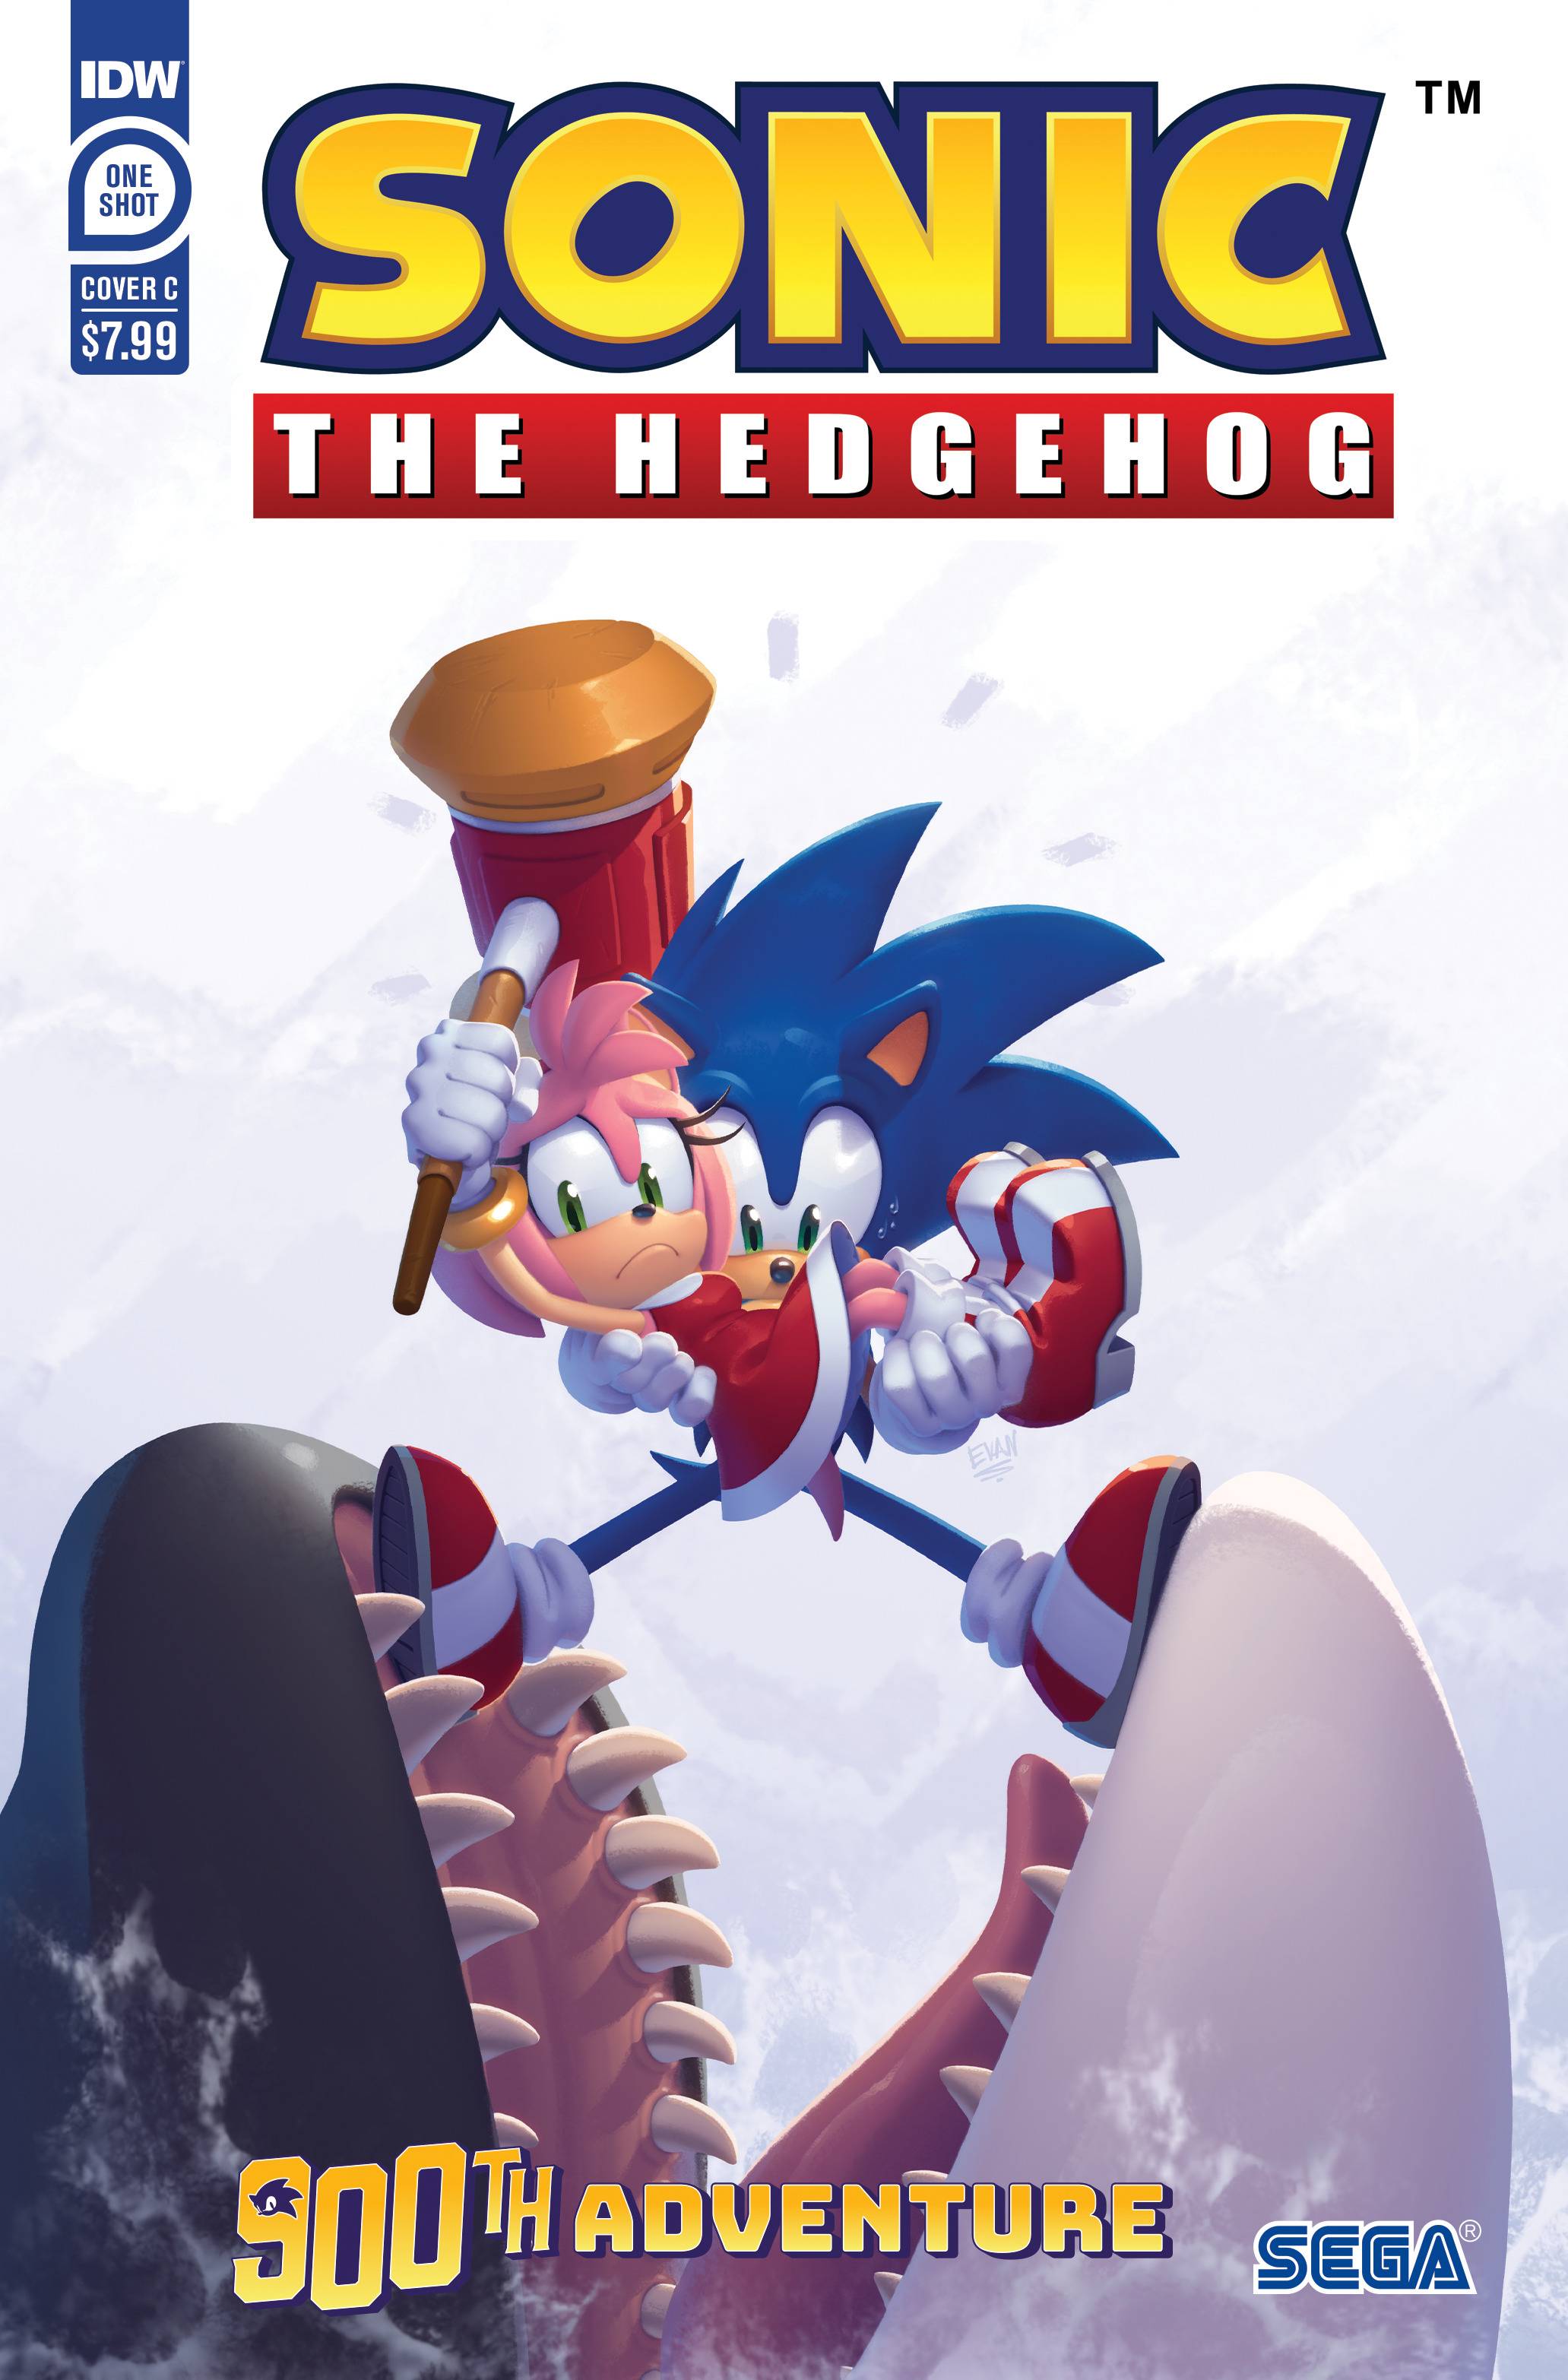 Sonic the hedgehog 900th adventure